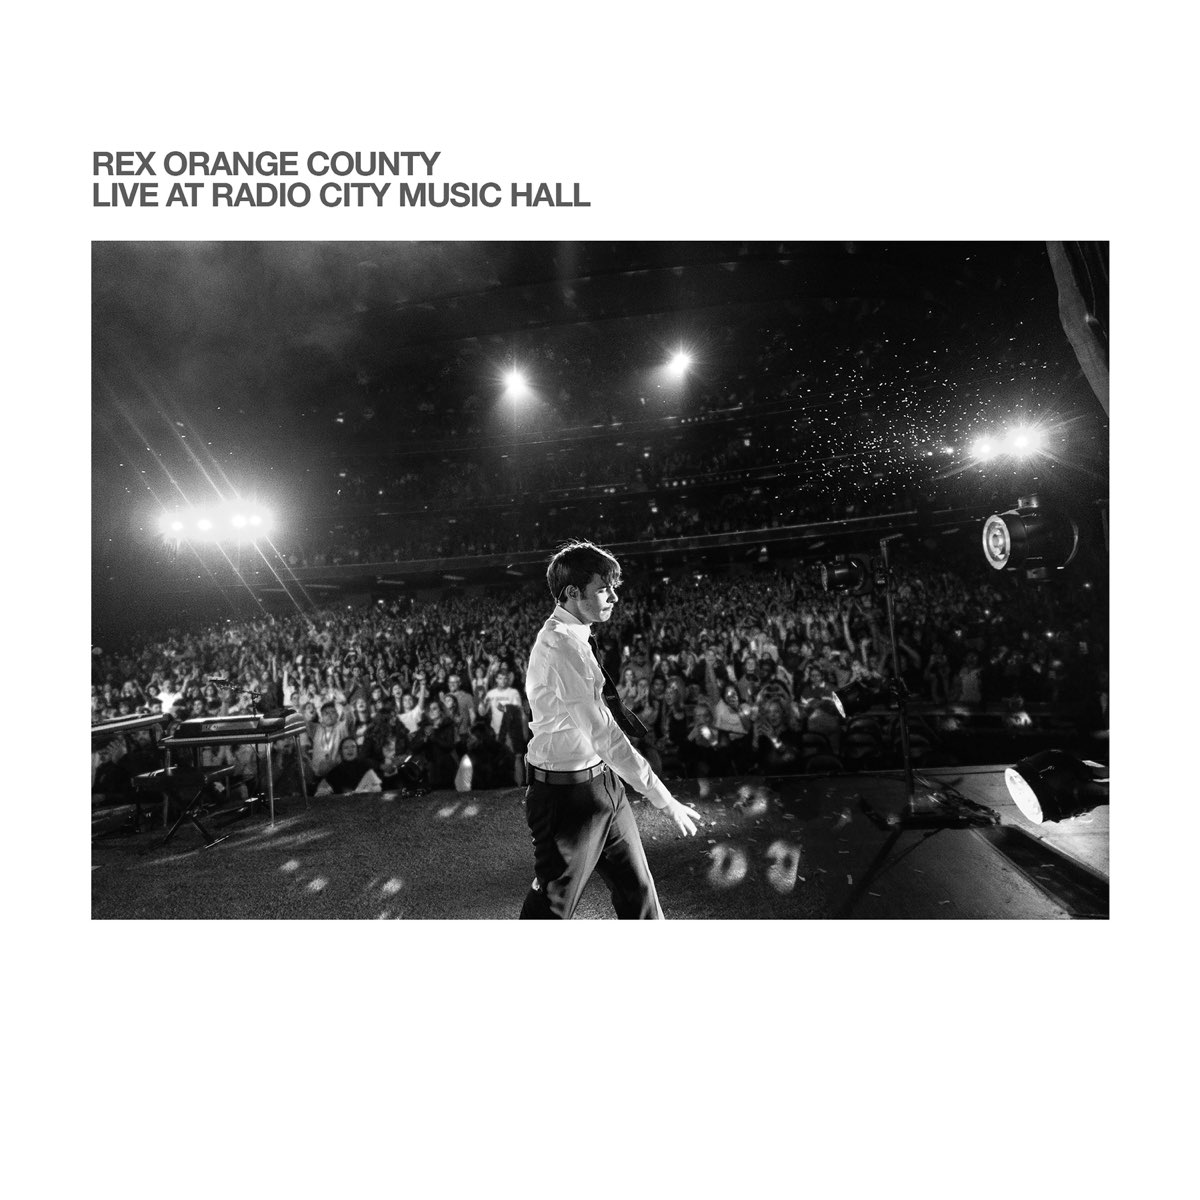 Live at Radio City Music Hall by Rex Orange County on Apple Music